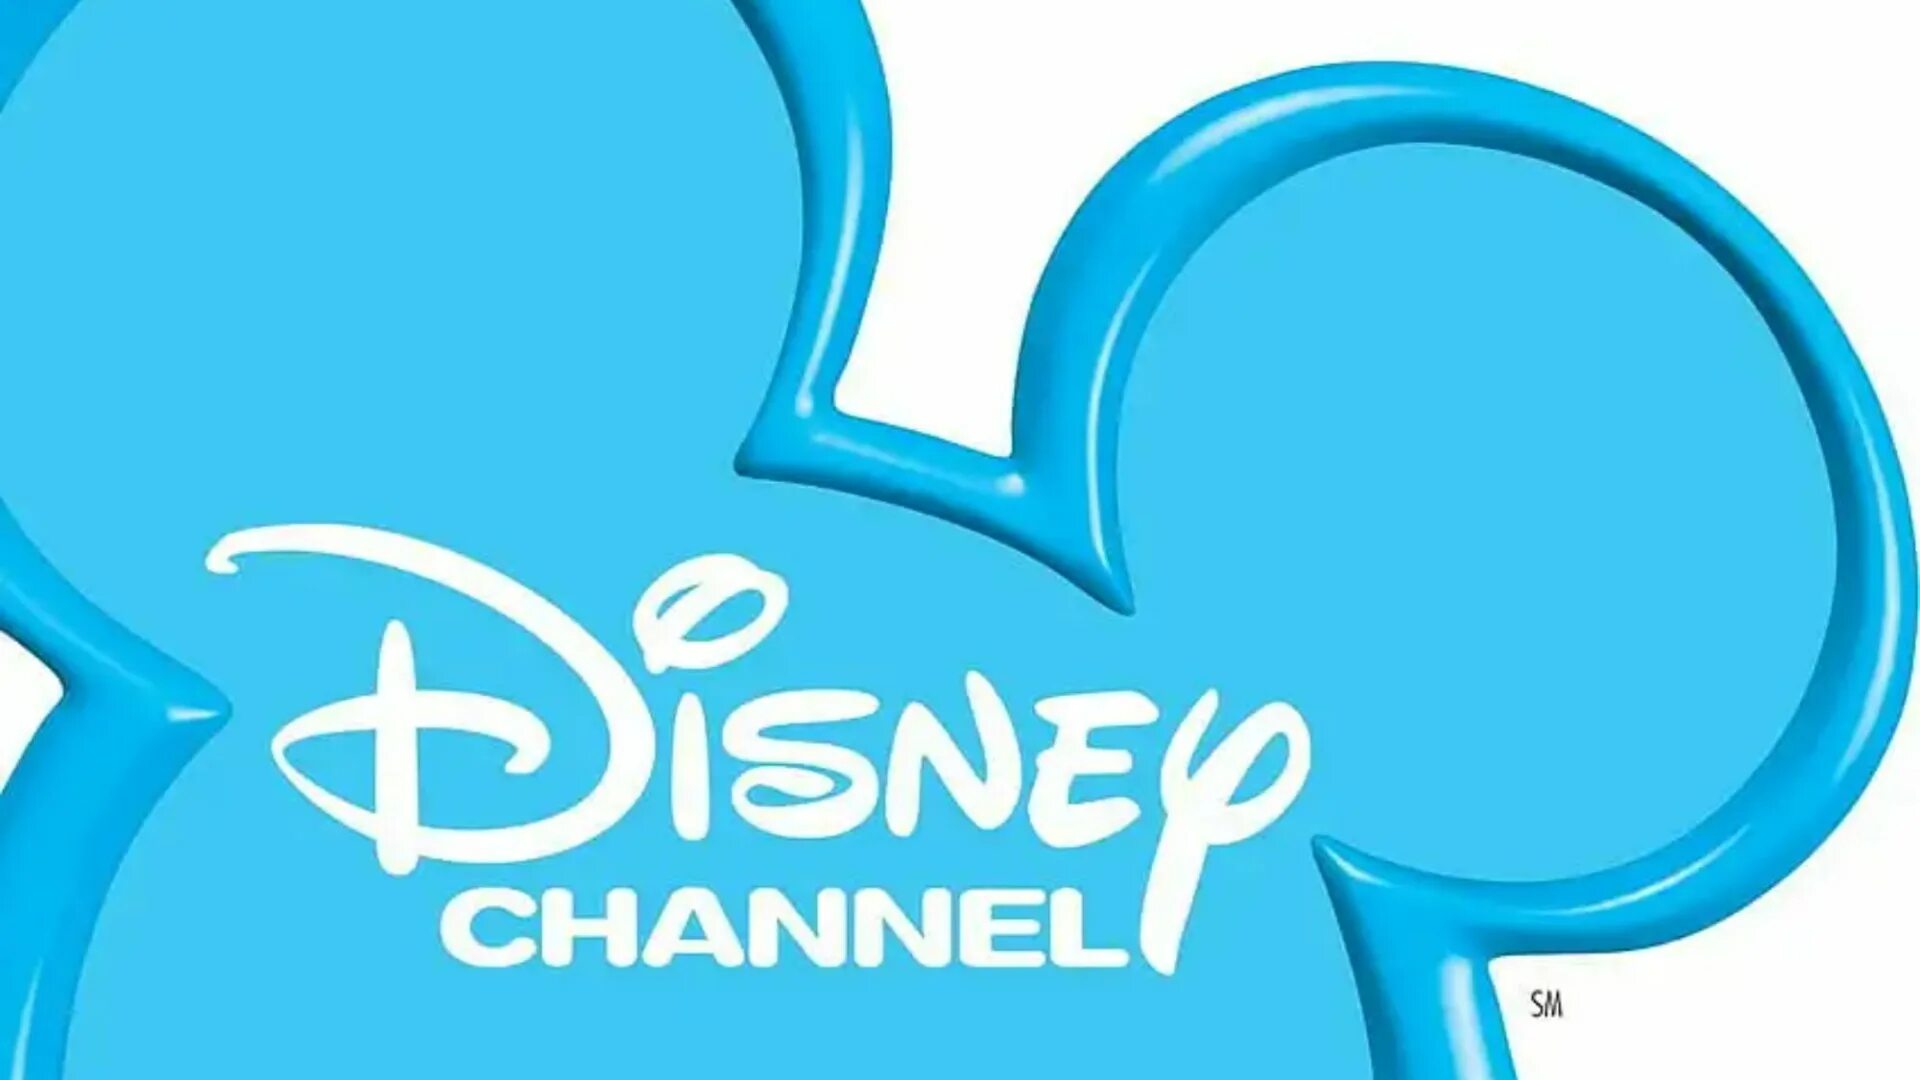 Тв канал дисней. Канал Дисней. Логотип Disney channel. Канал Дисней картинки. Дисней Телеканал логотип.